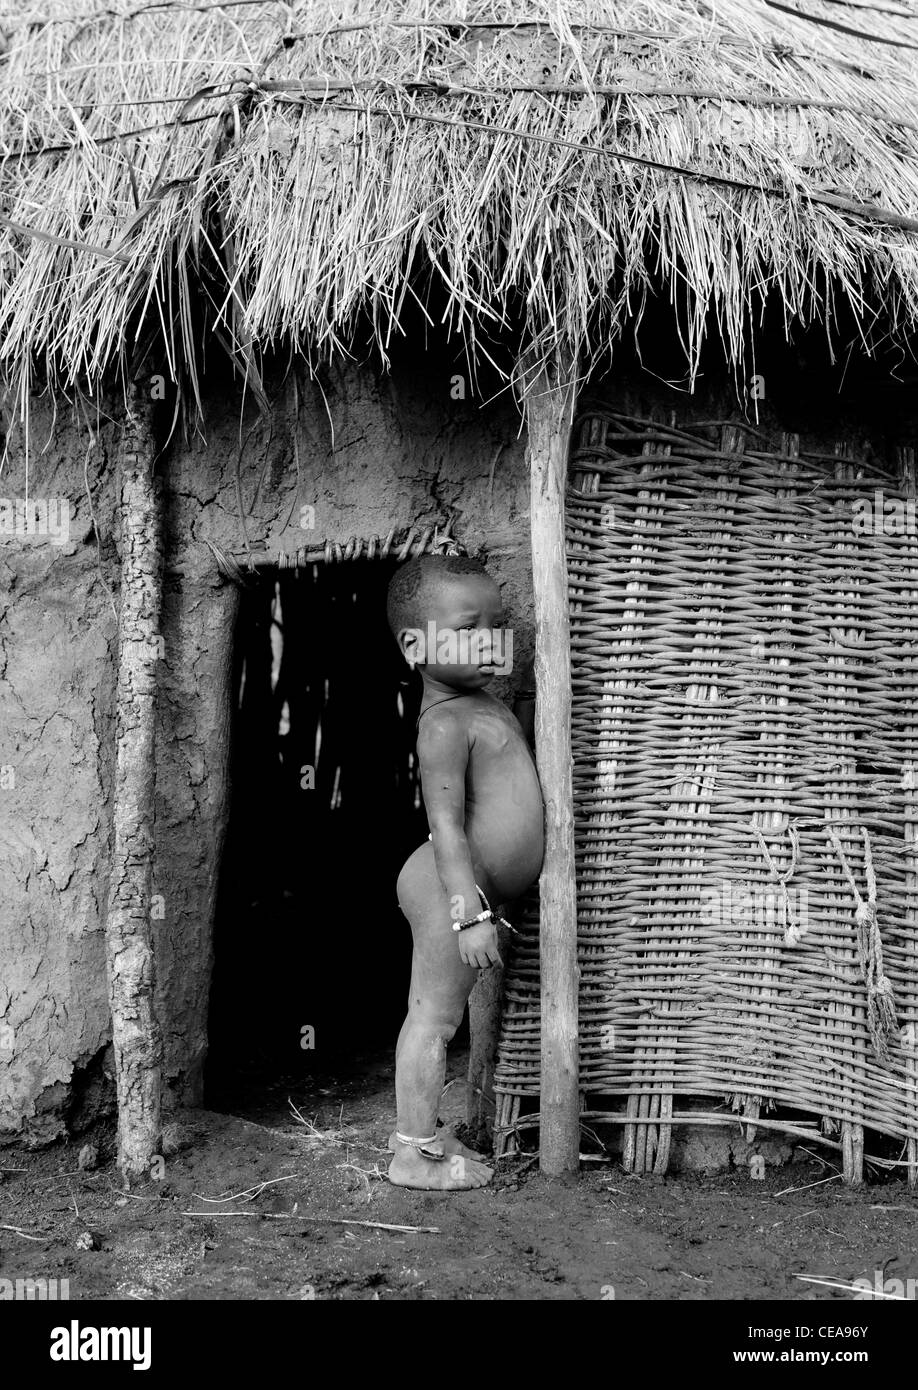 Nude boy on boy in Addis Ababa